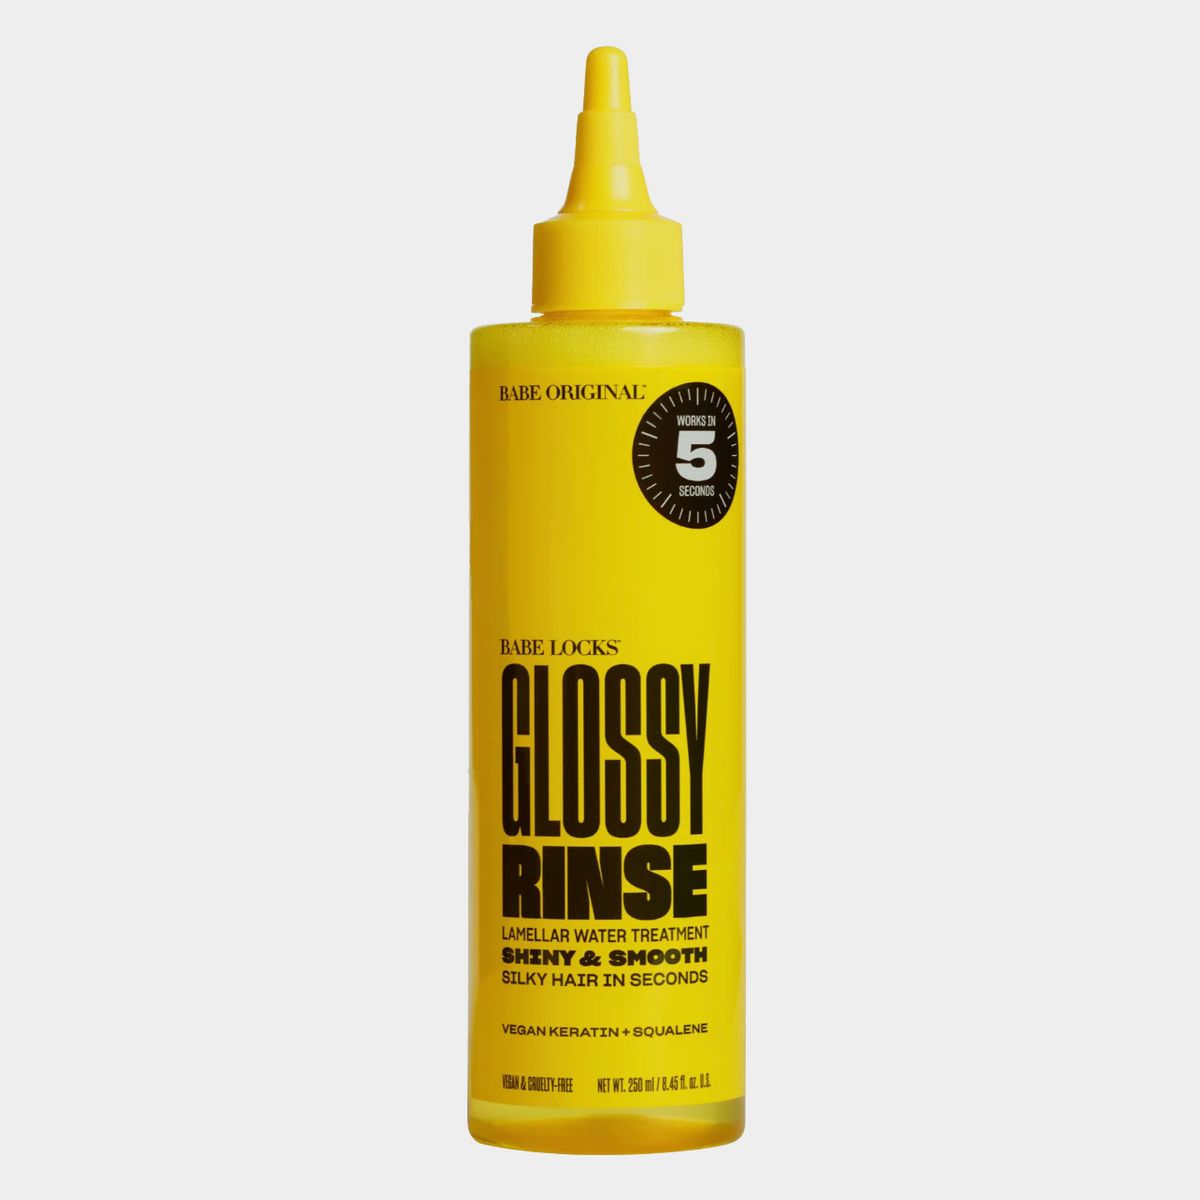 Babe Original Glossy Rinse Hair Treatment